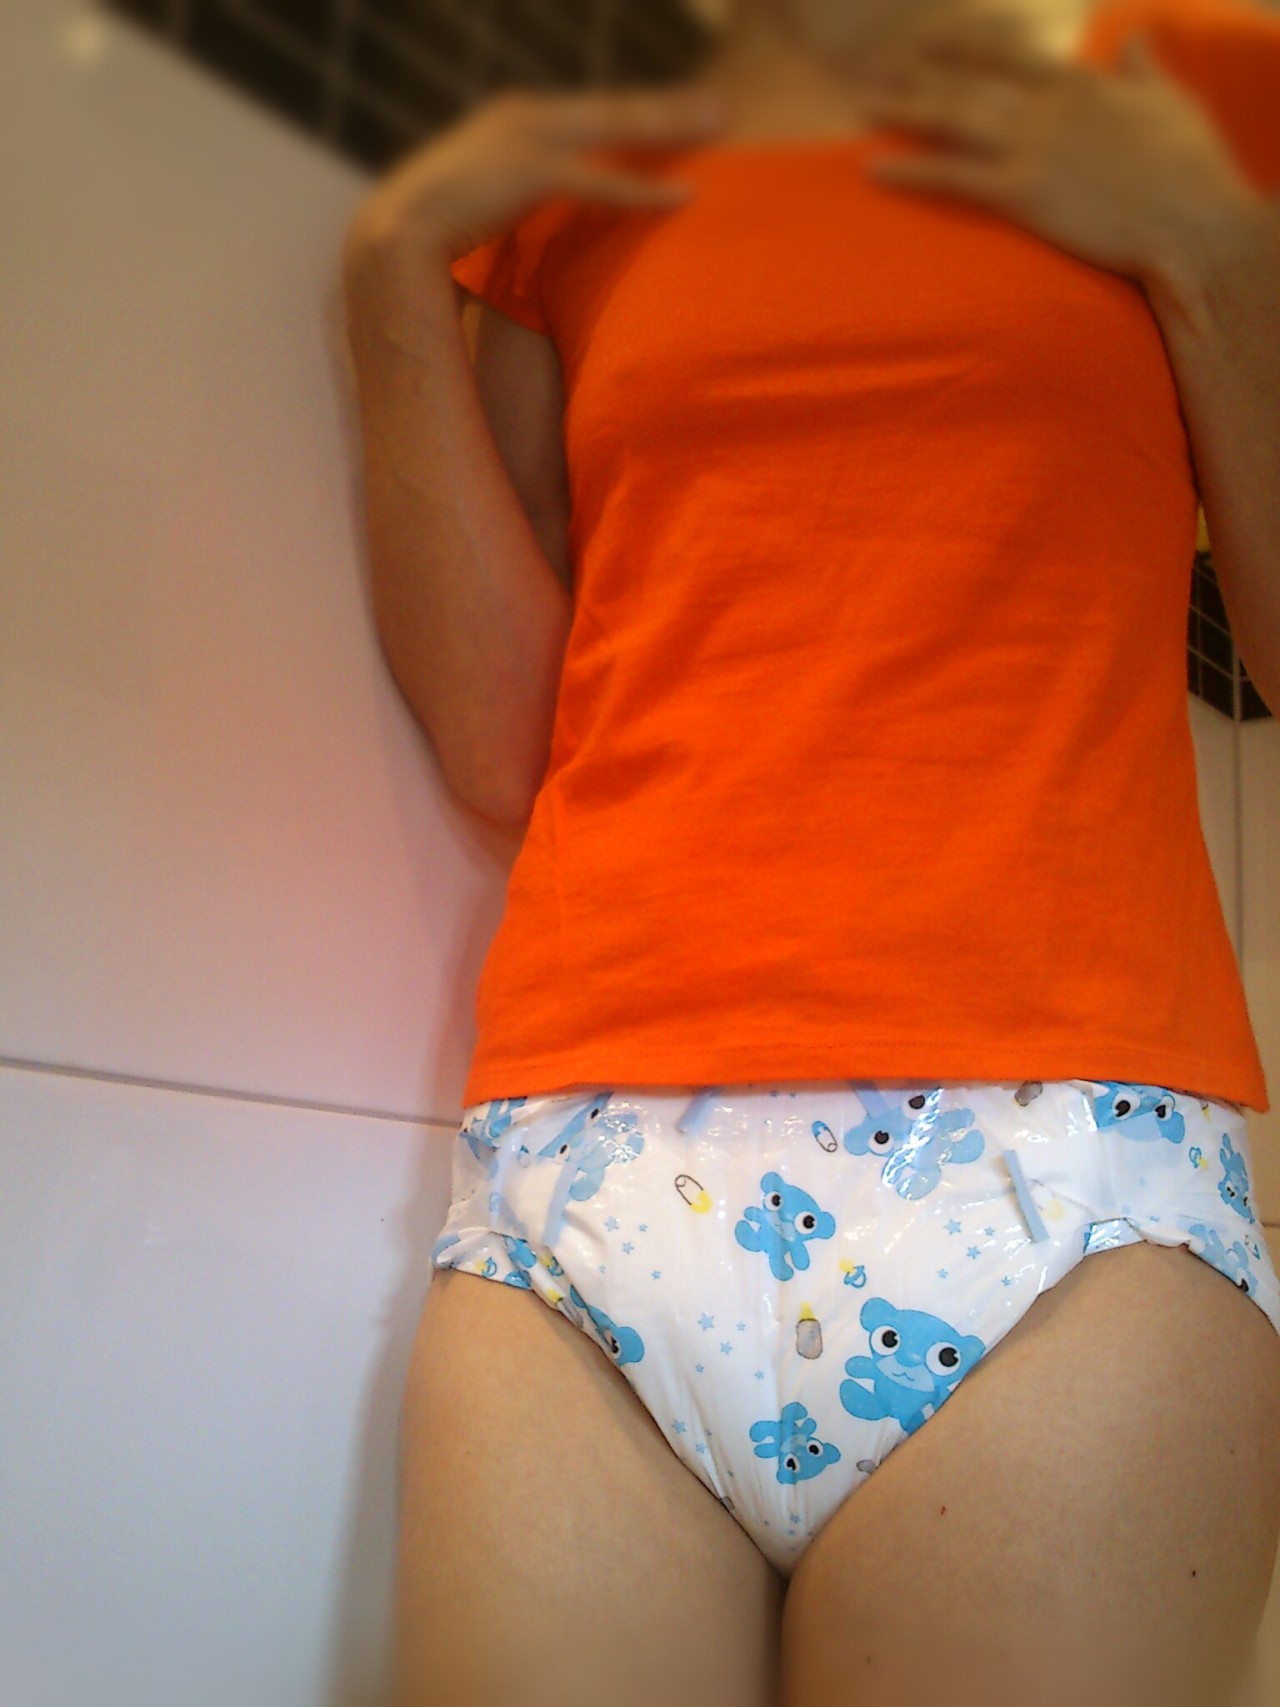 I’ve got blue Teddy Bears on my diaper (10 pics)I love those plastic, crinkly,